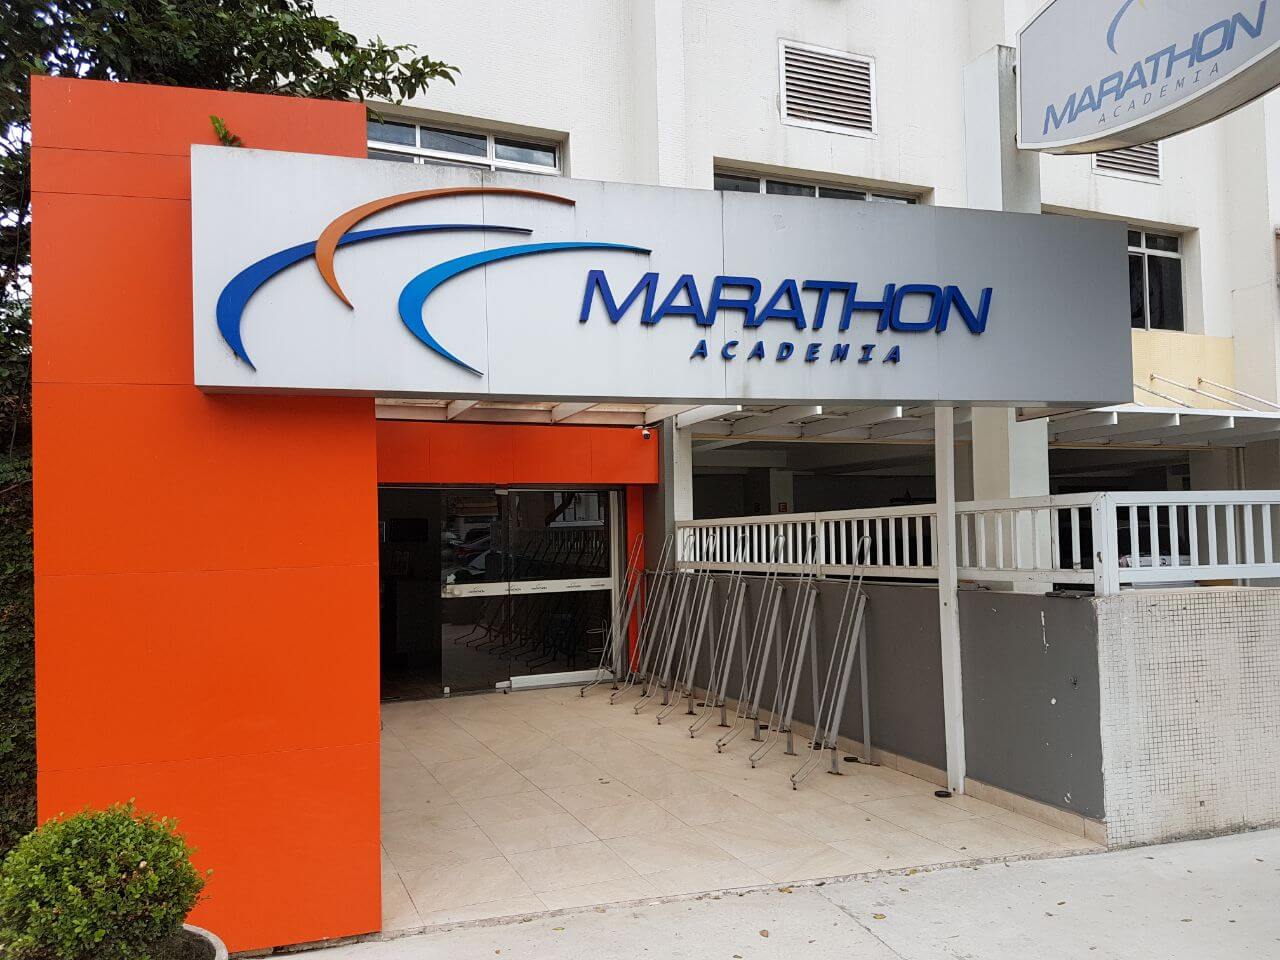 Horários das aulas  Marathon Academia - Tá na Ponta, tá na Marathon!